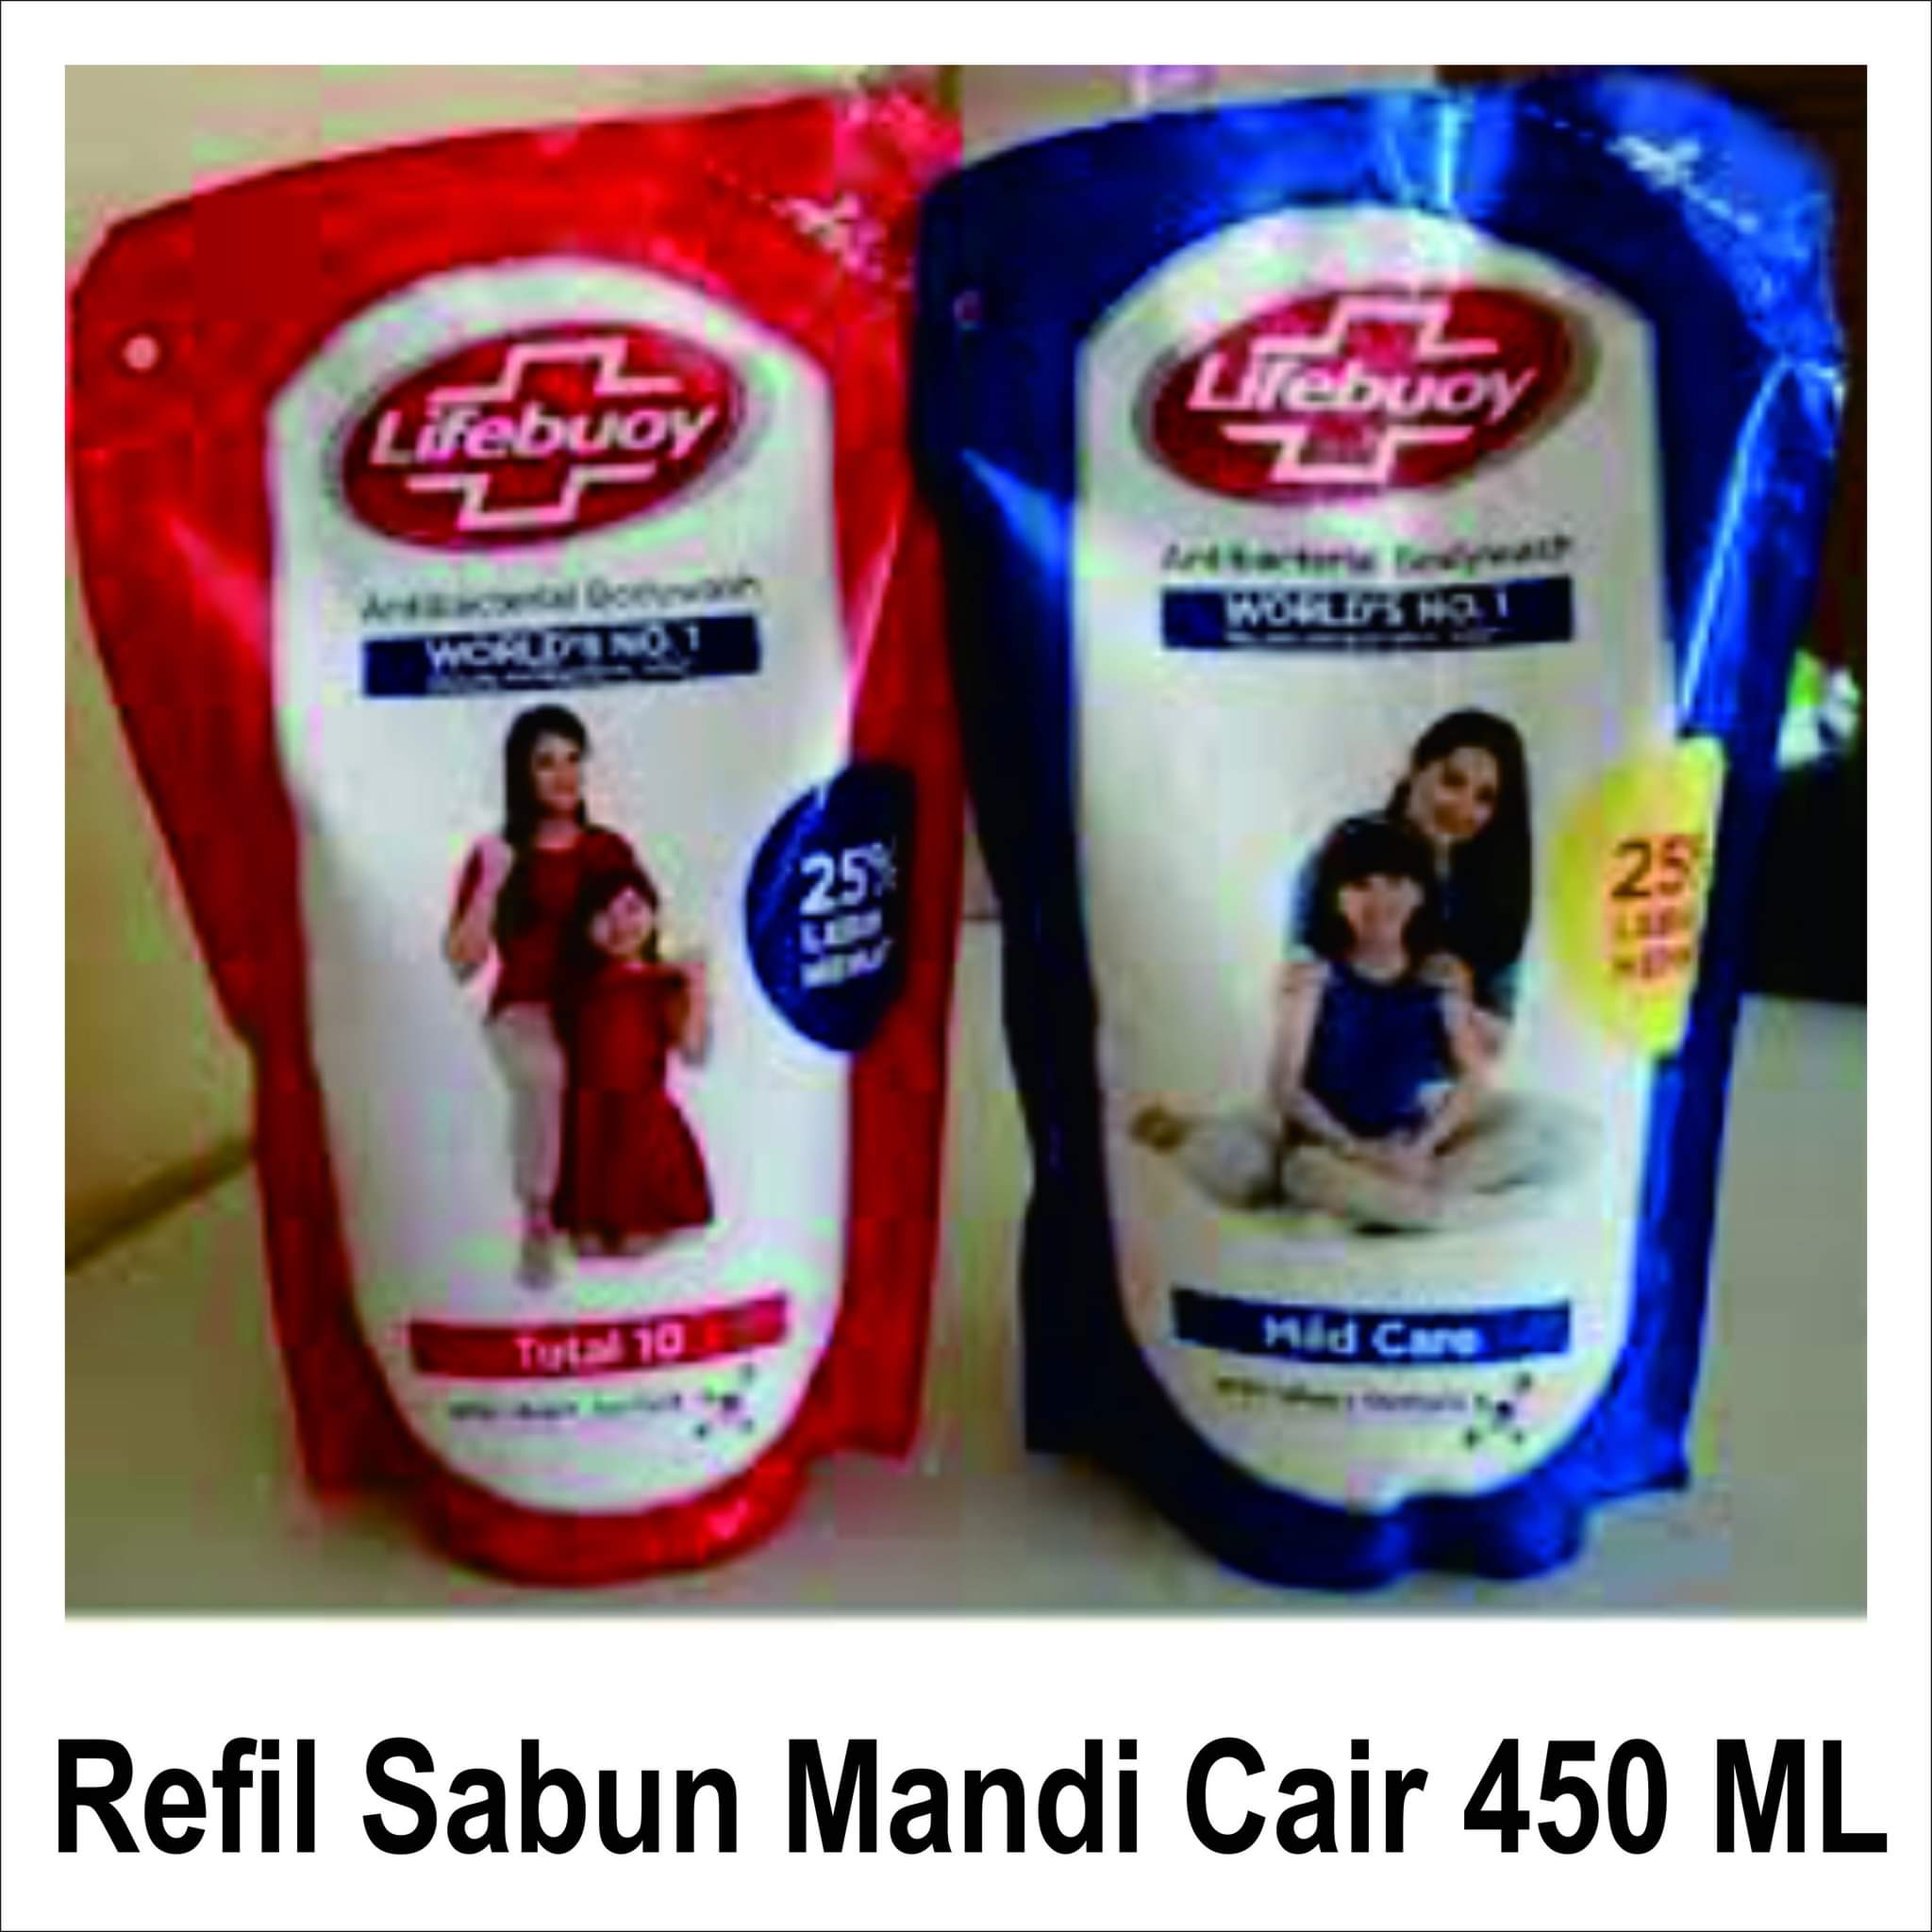 Refill Sabun Mandi Cair 450 ml